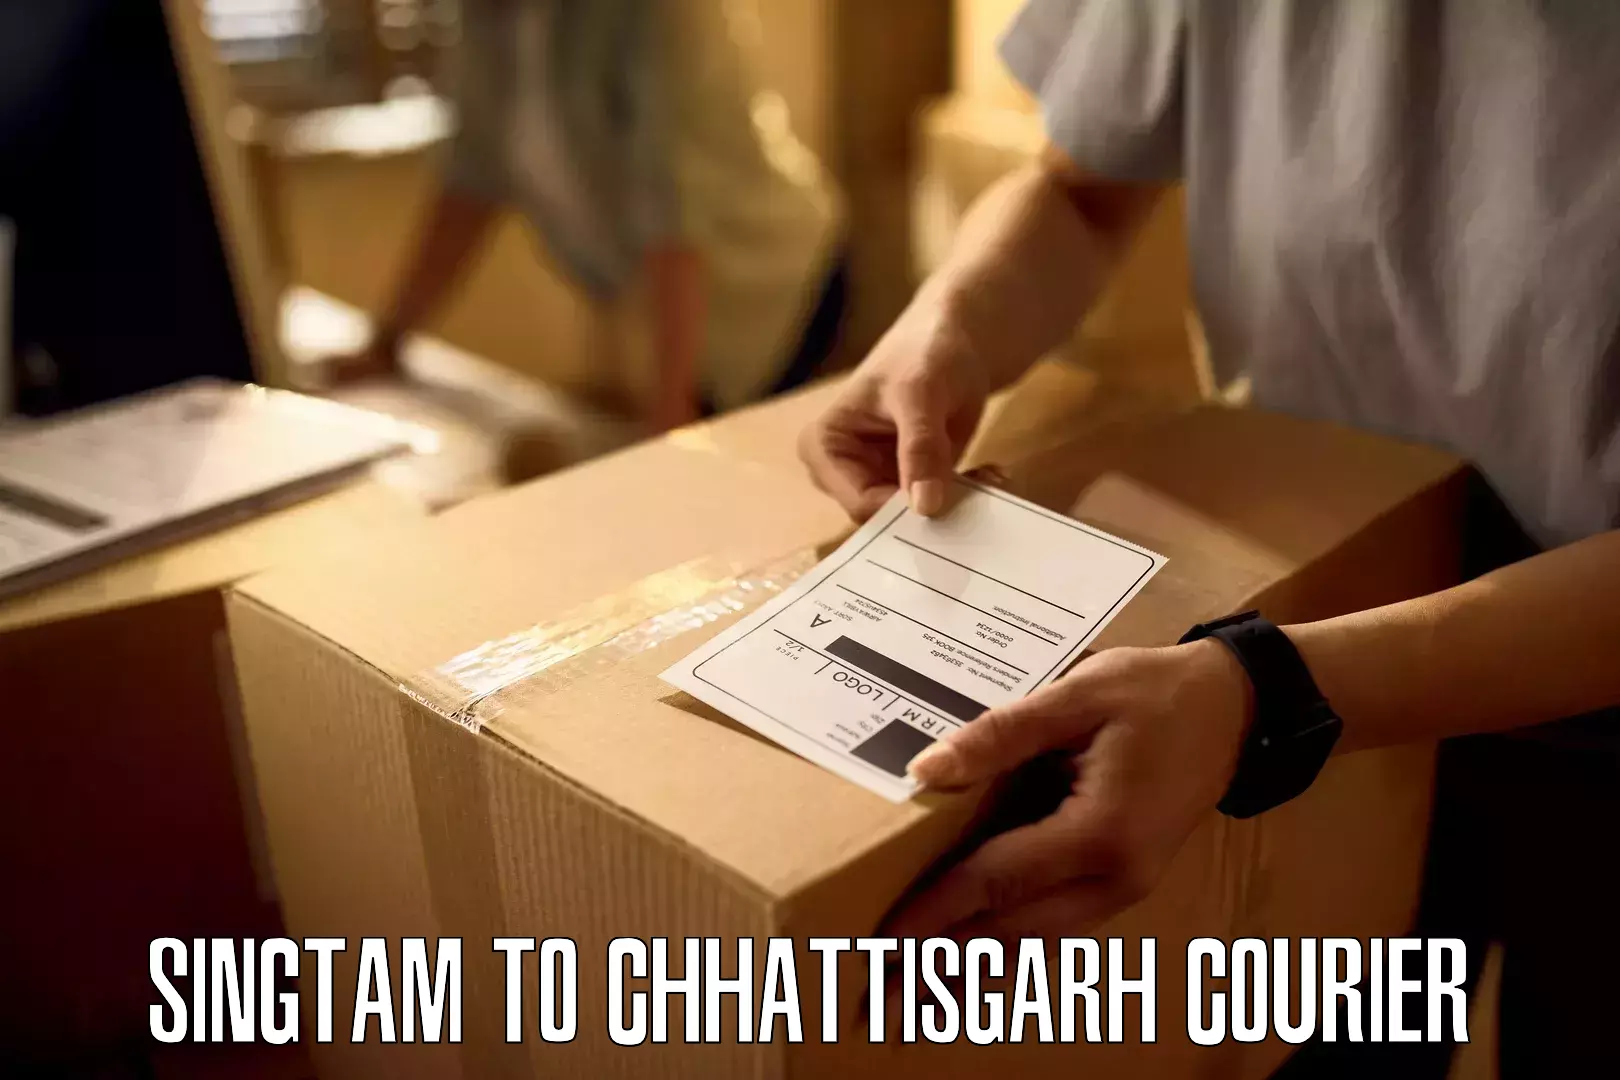 Multi-city courier Singtam to Korea Chhattisgarh